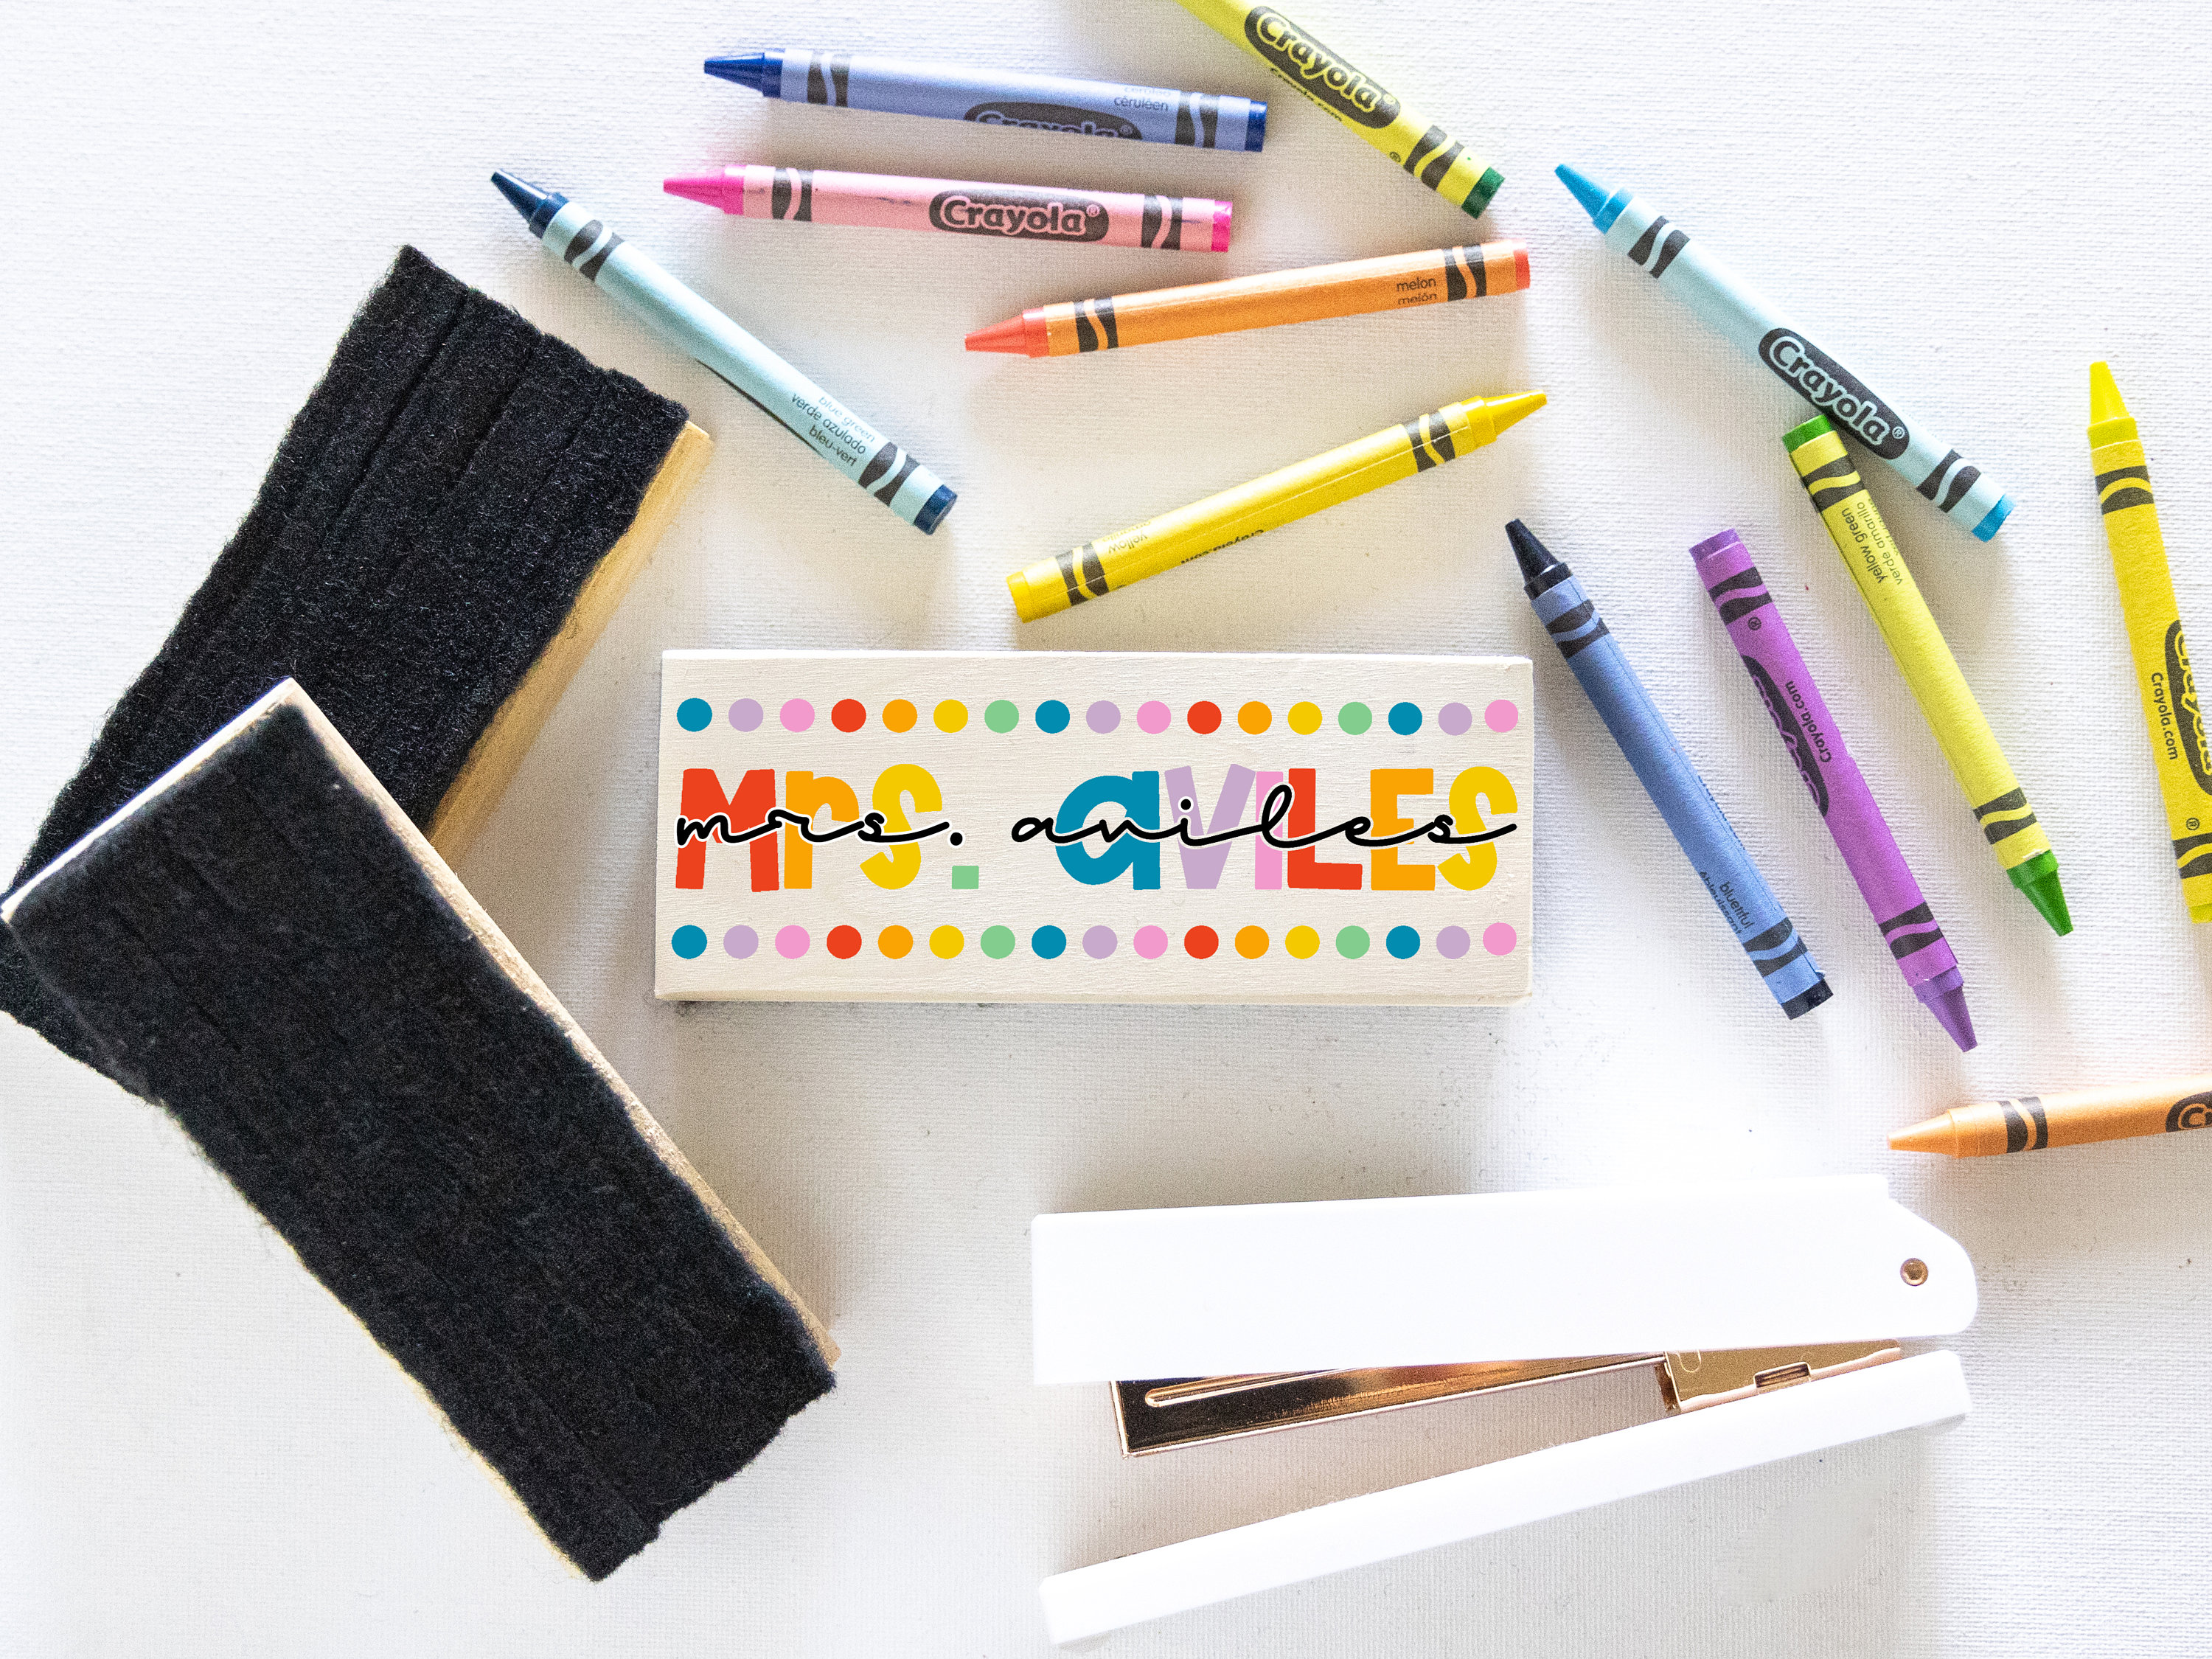 Recycled Rainbow Pencil & Eraser Set